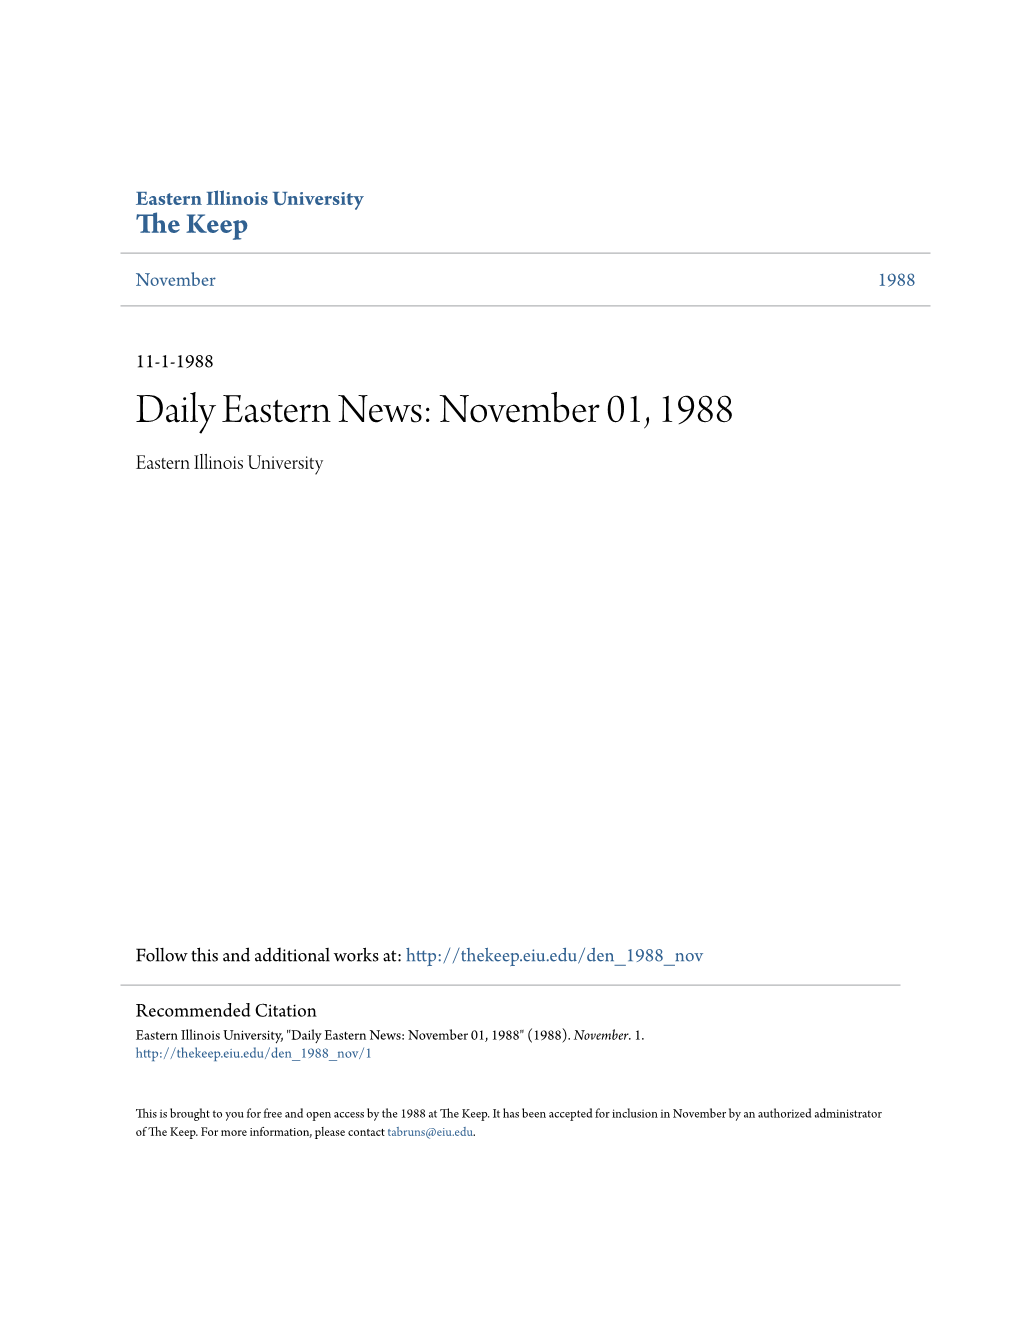 Daily Eastern News: November 01, 1988 Eastern Illinois University